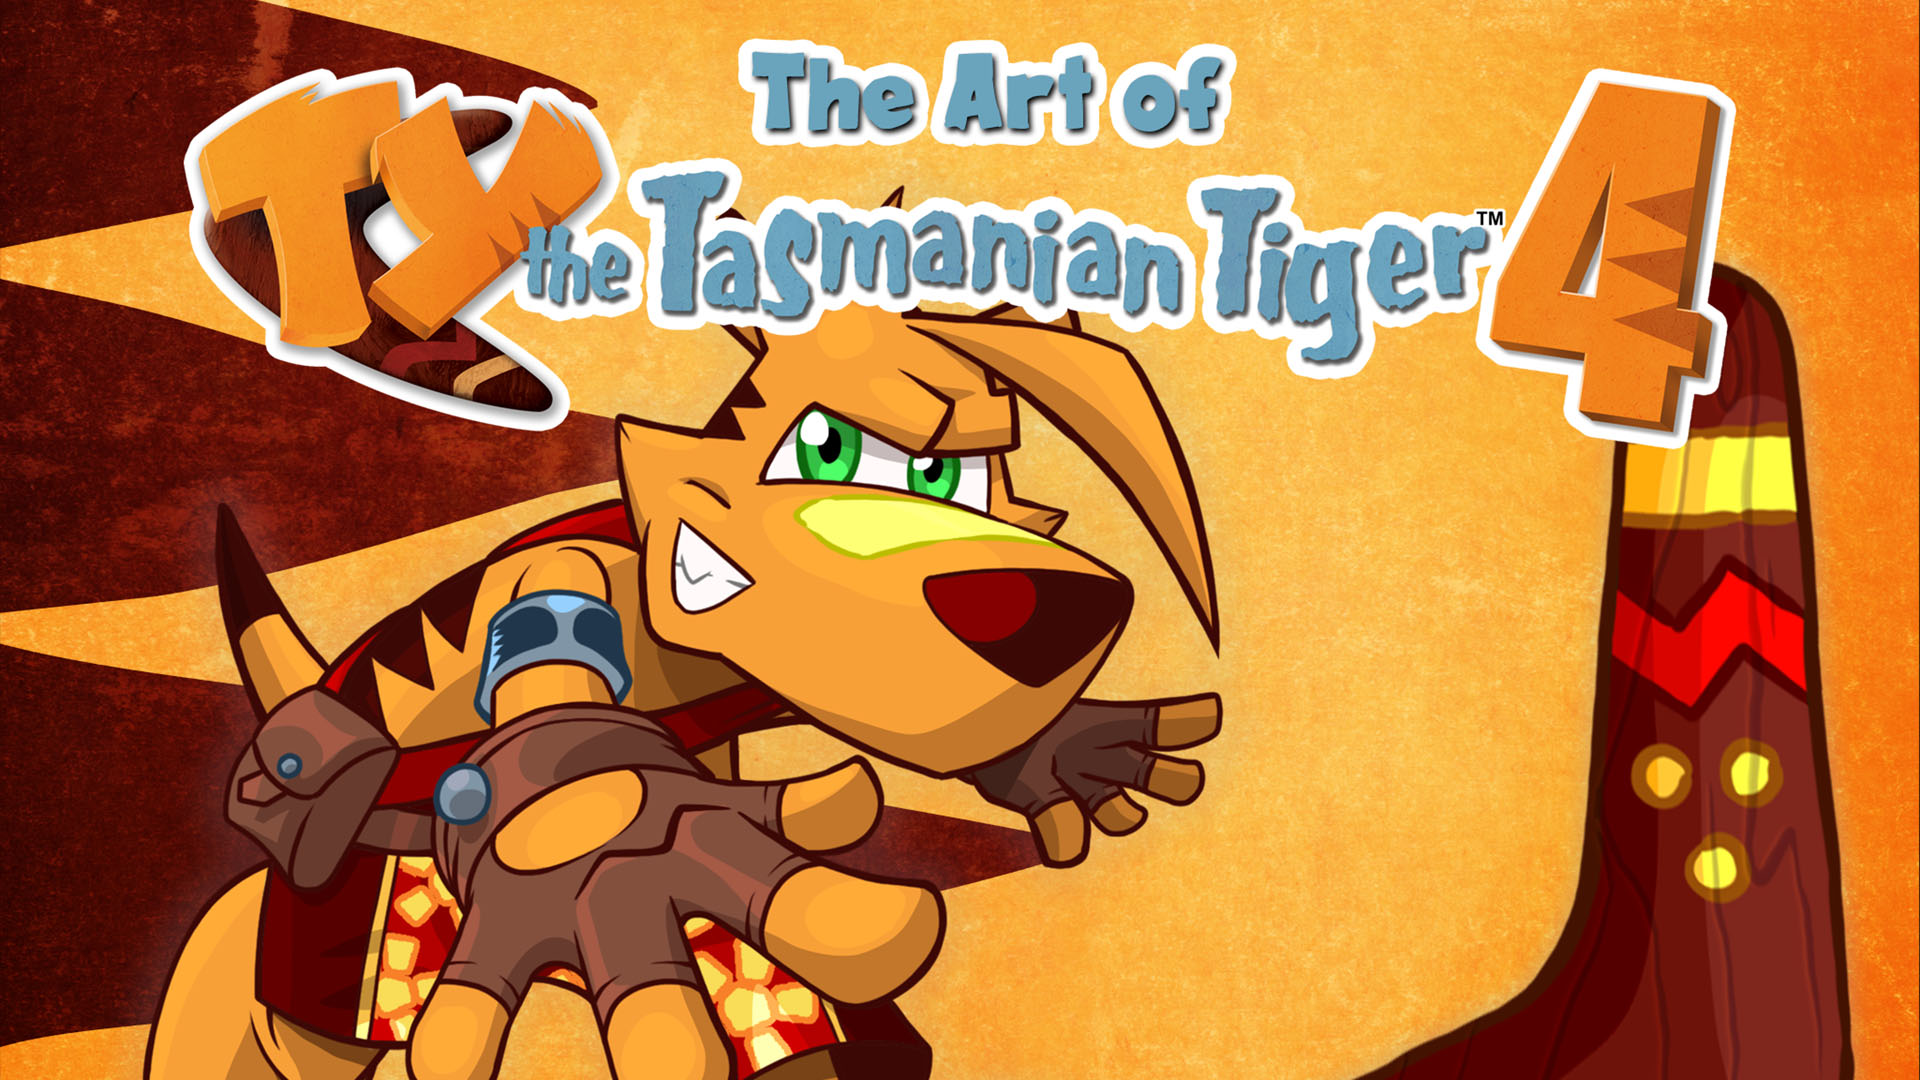 TY the Tasmanian Tiger 4 - The Art of screenshot